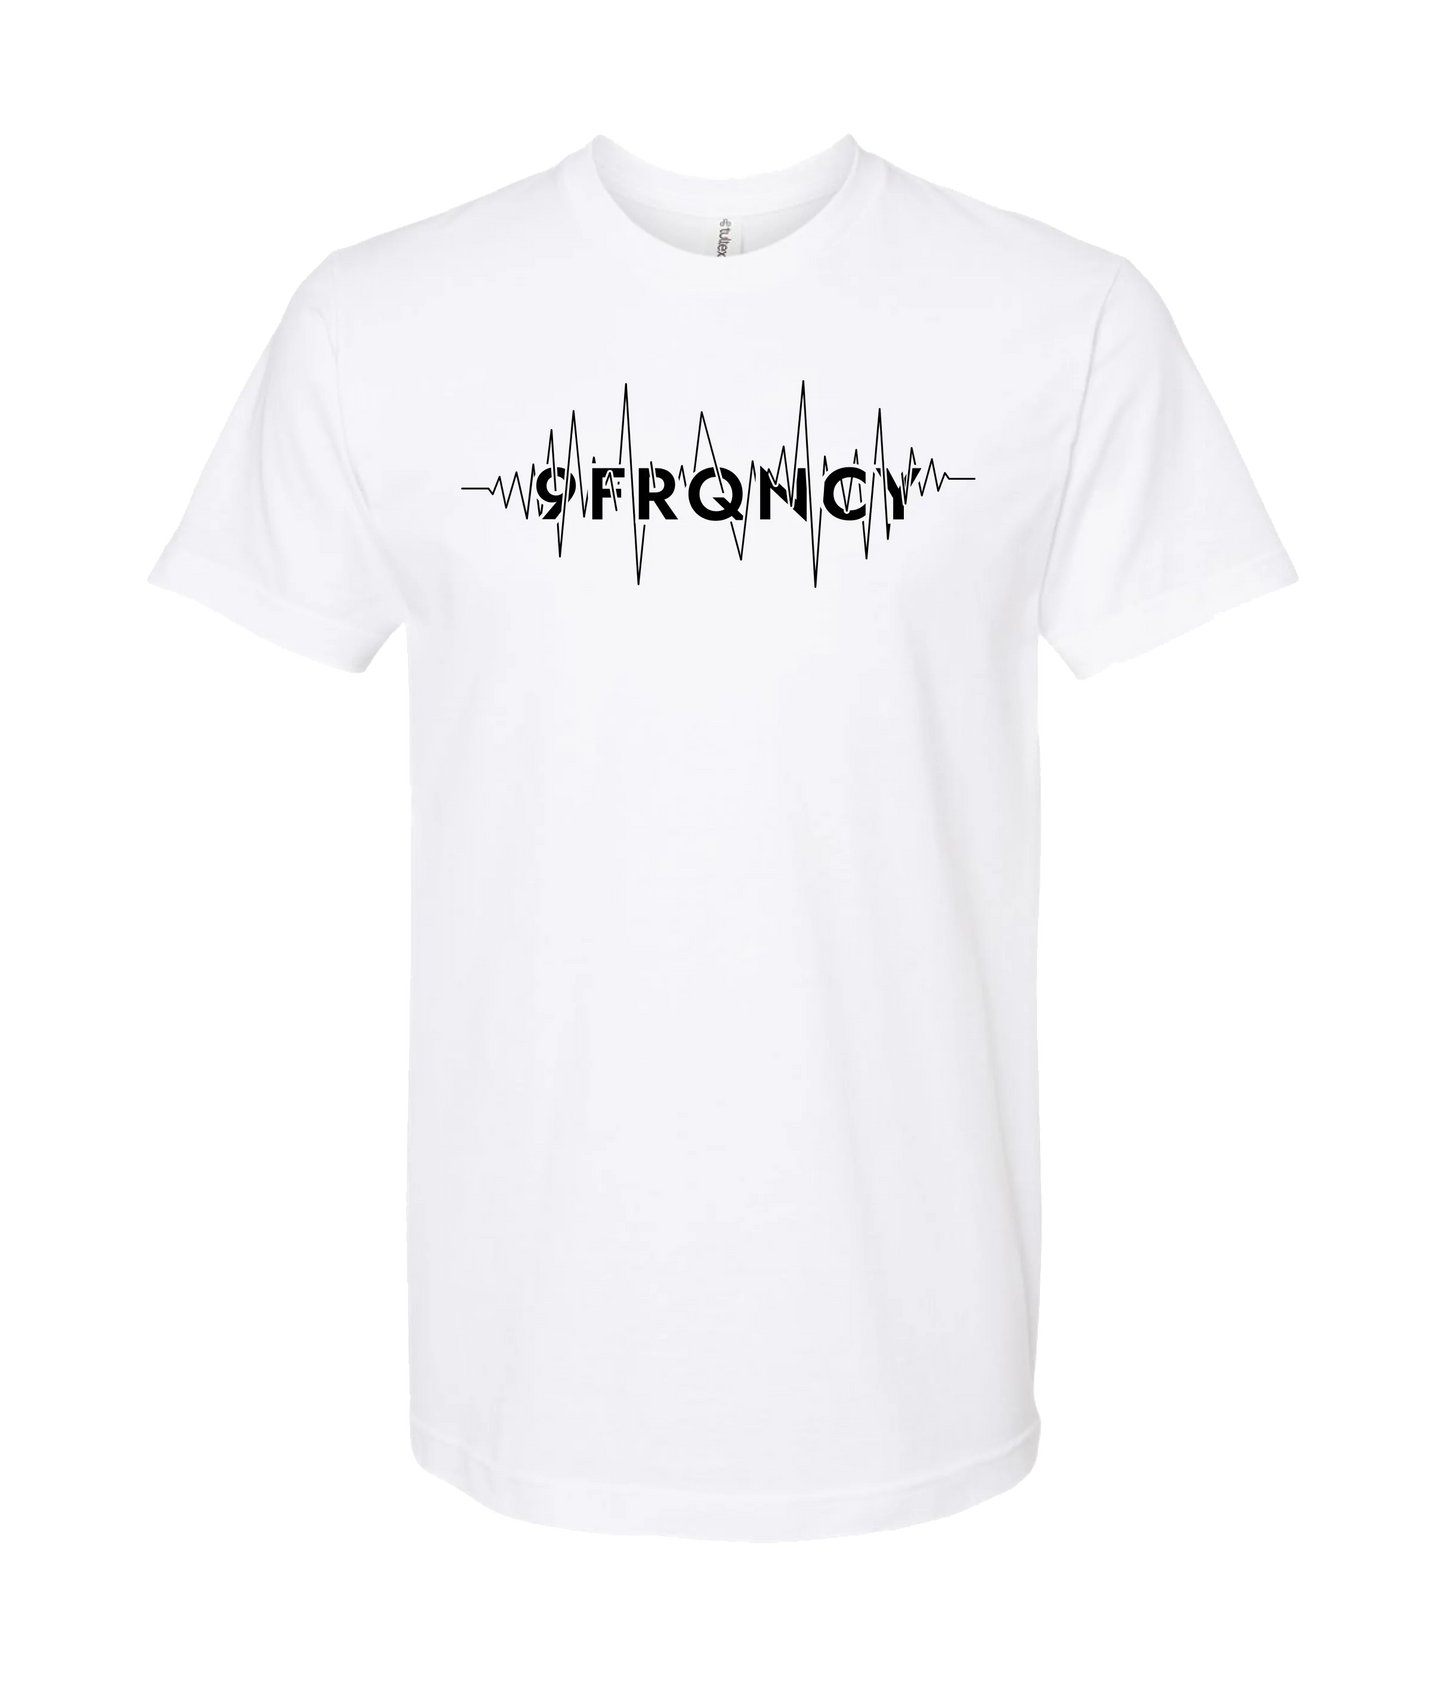 9frequency
 - Logo - White T-Shirt